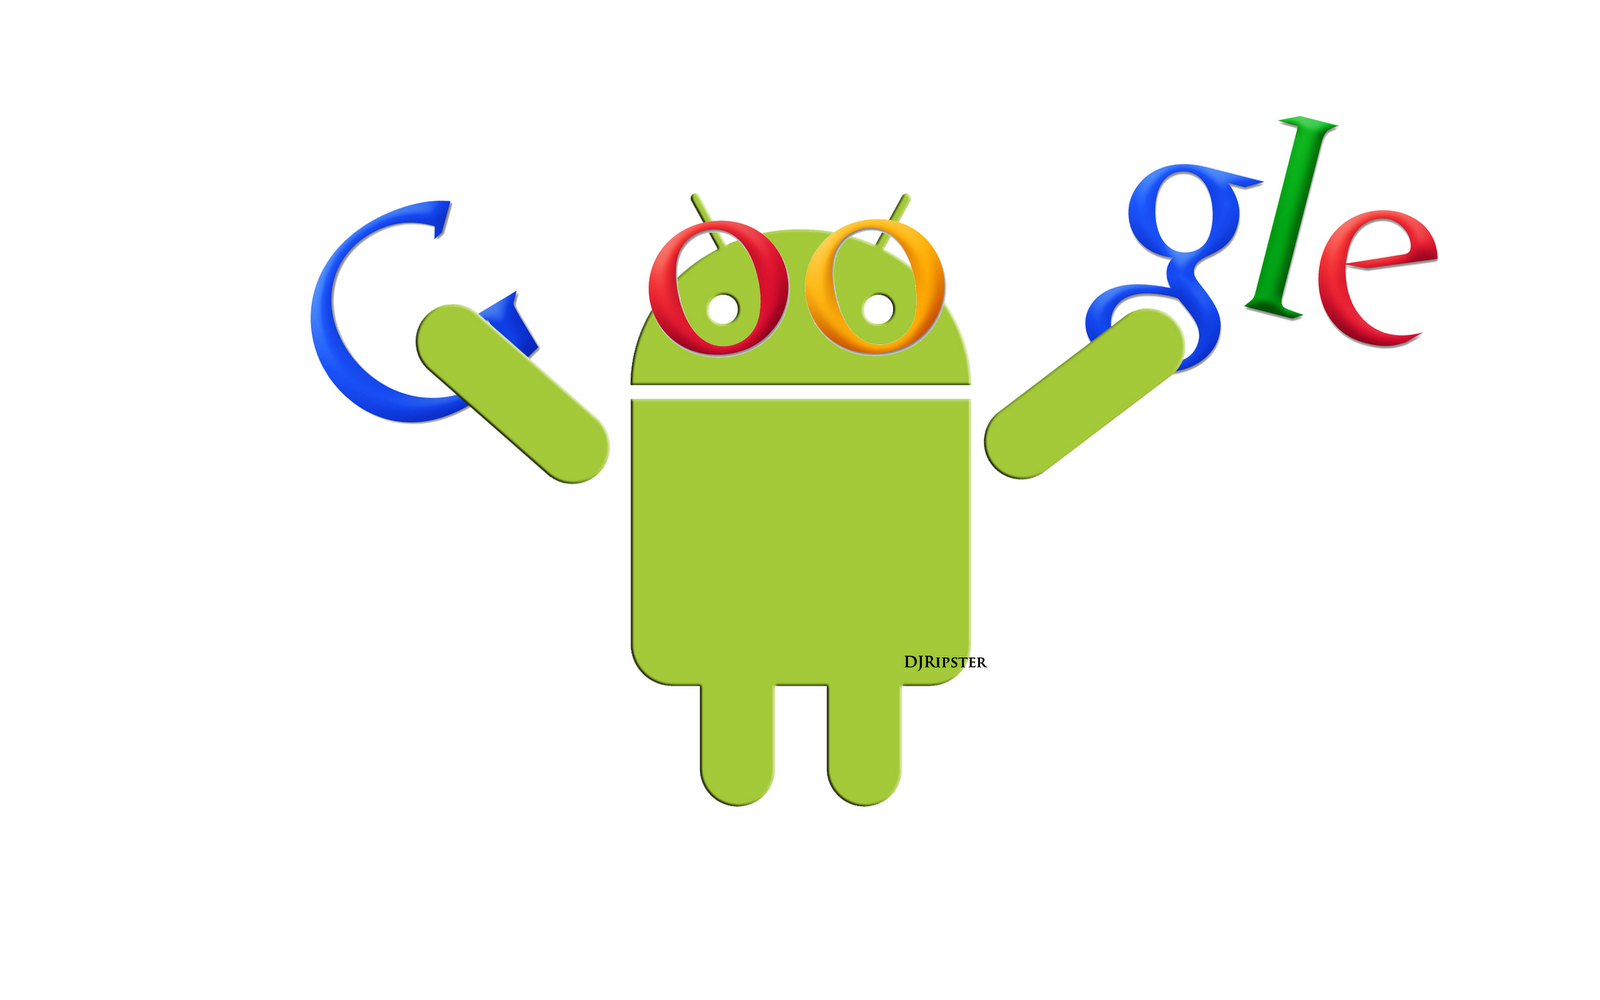 Google android console. Google Android. Google и Android os. Операционная система гугл андроид. Android картинки.